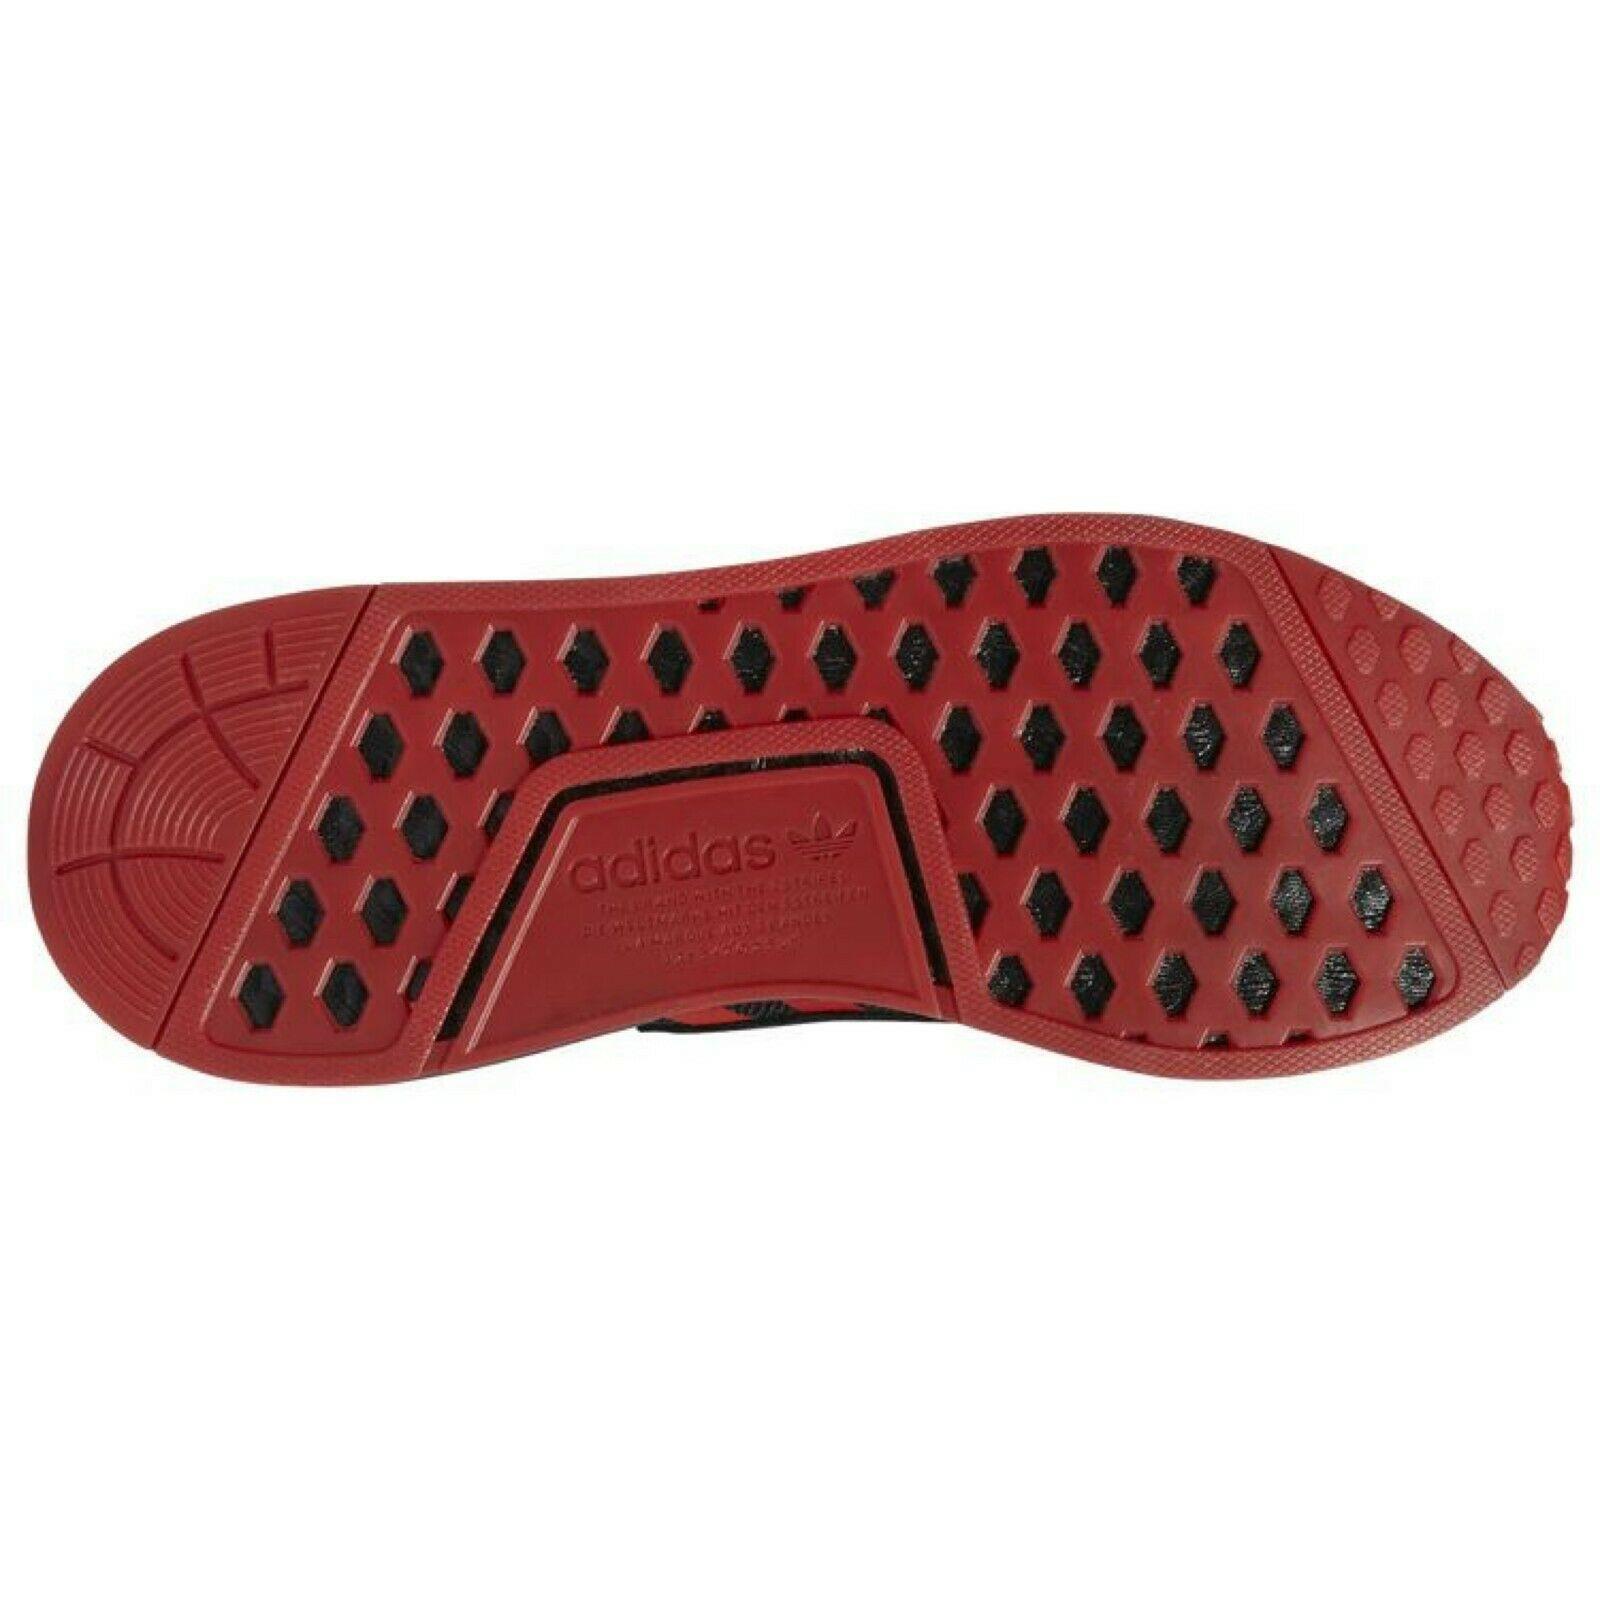 Adidas shoes Originals - Black , Black/Red Manufacturer 10